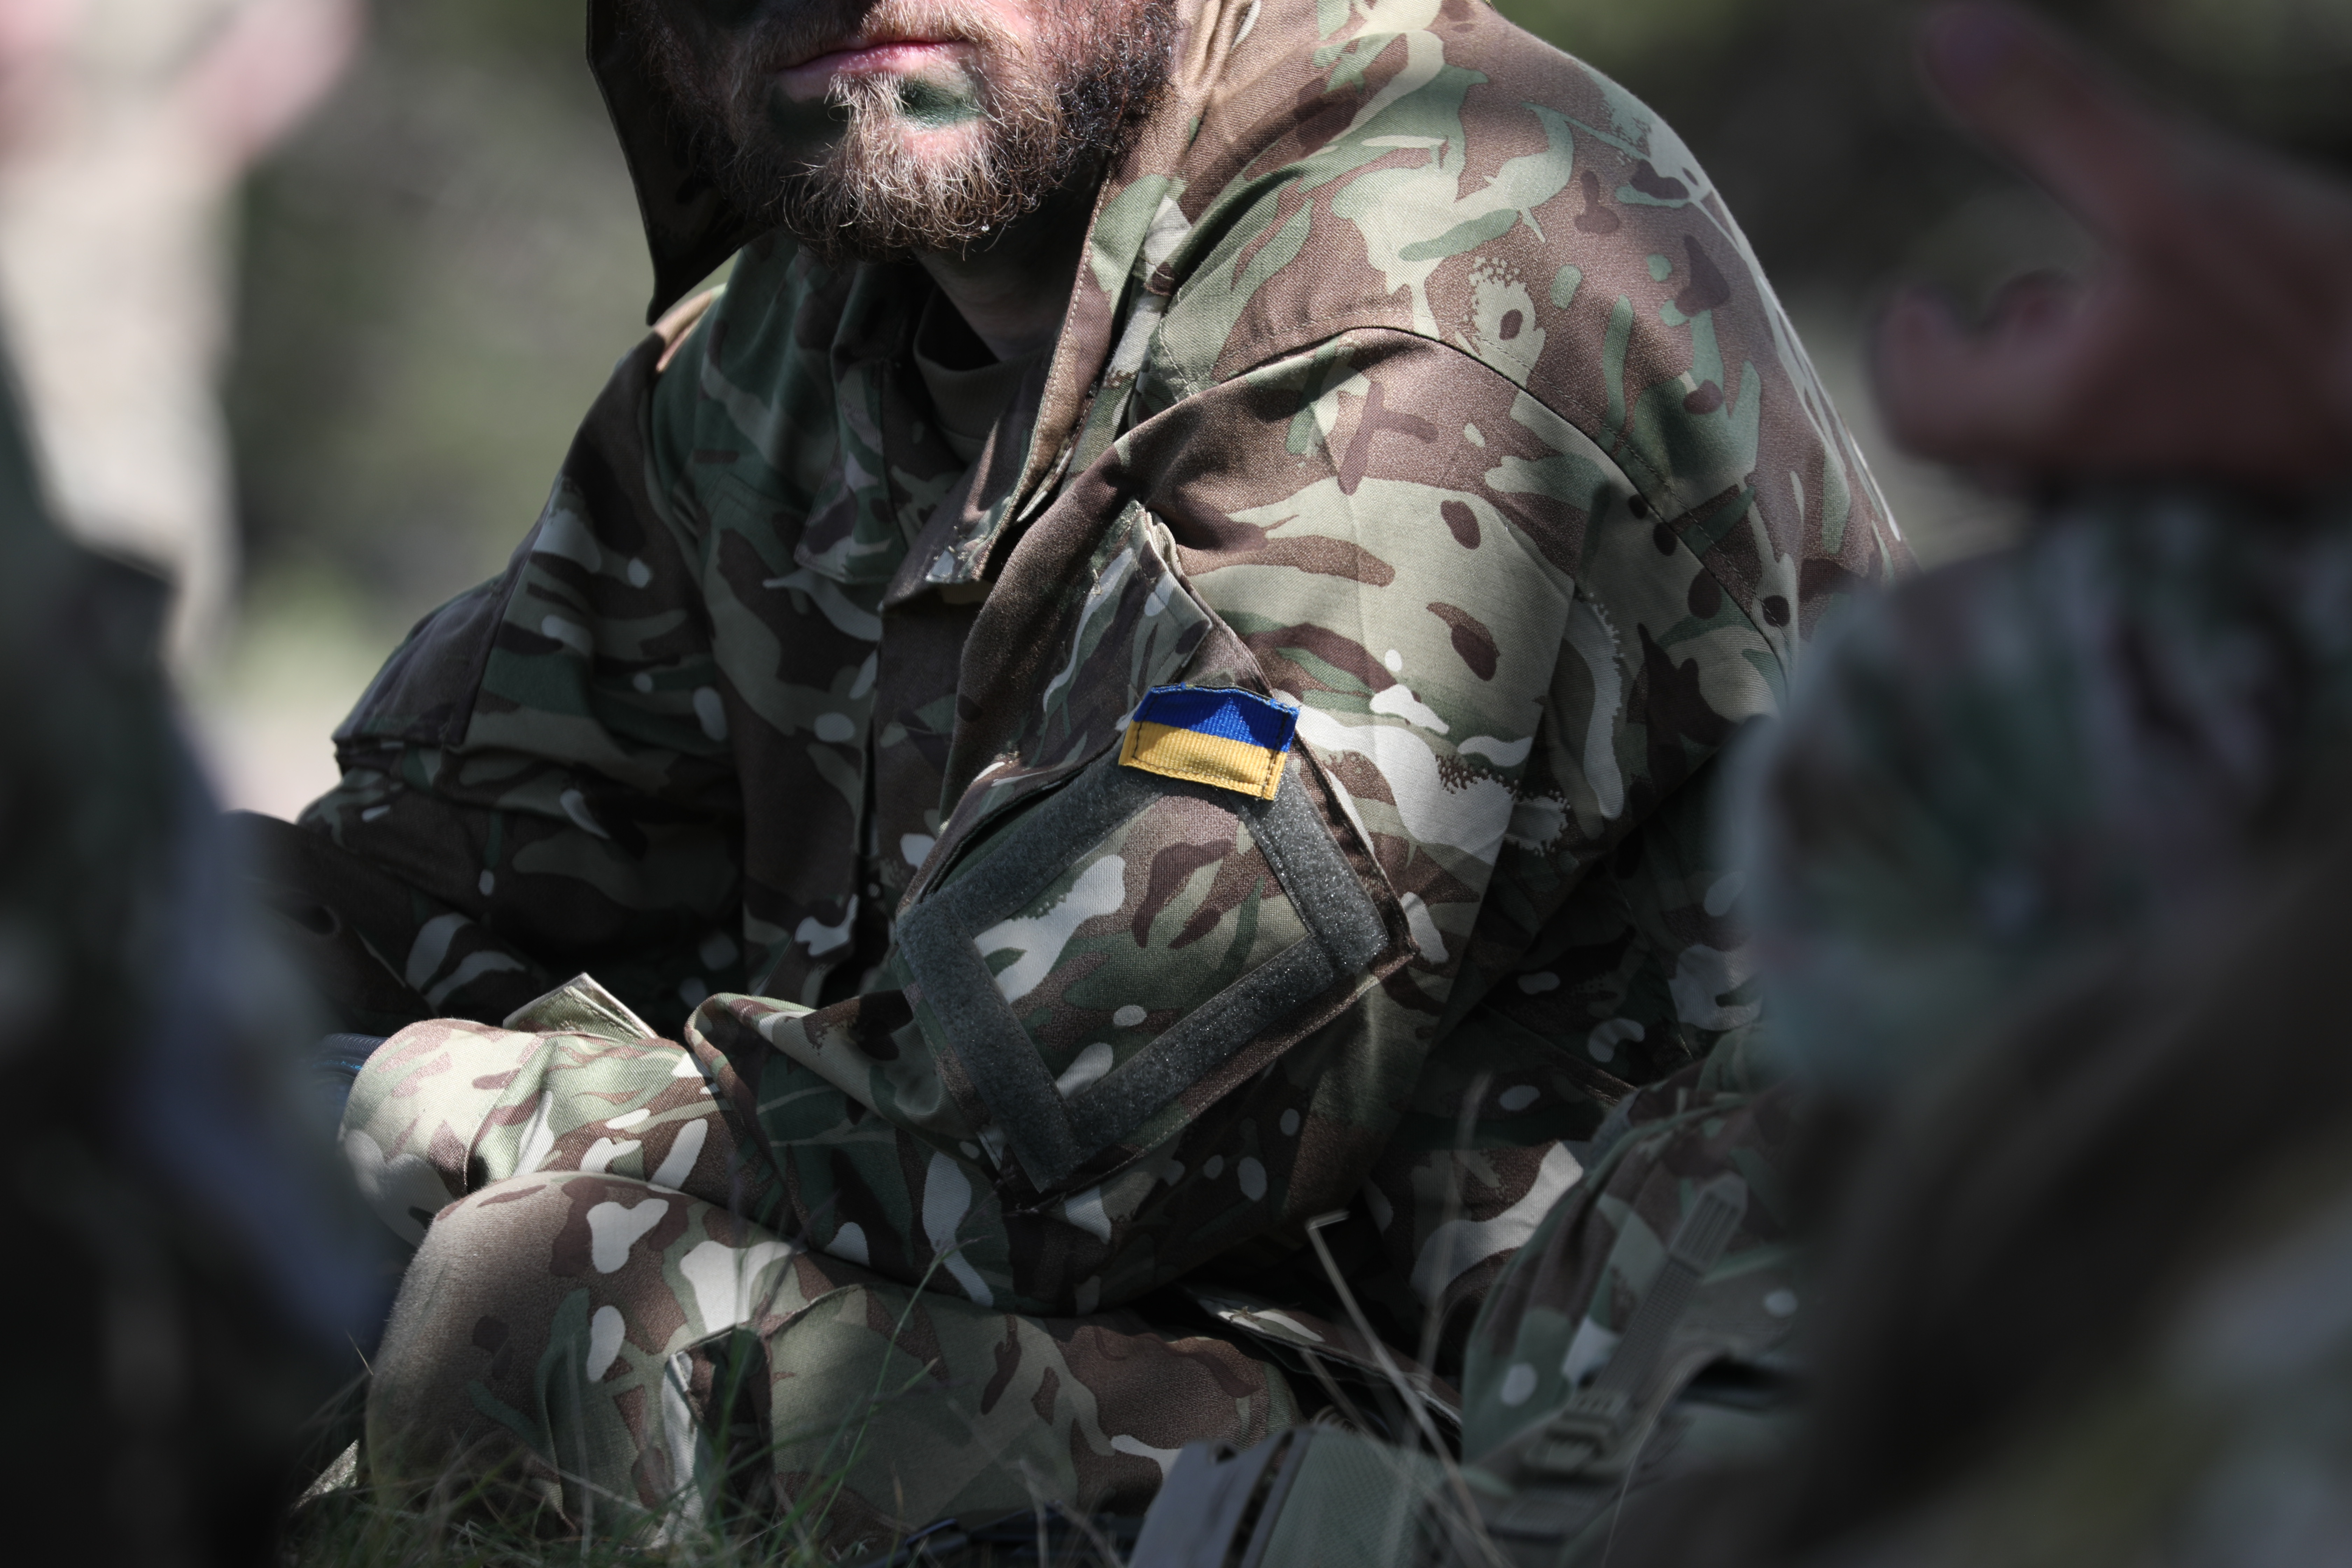 Image shows Ukrainian soldier in camouflage uniform. 